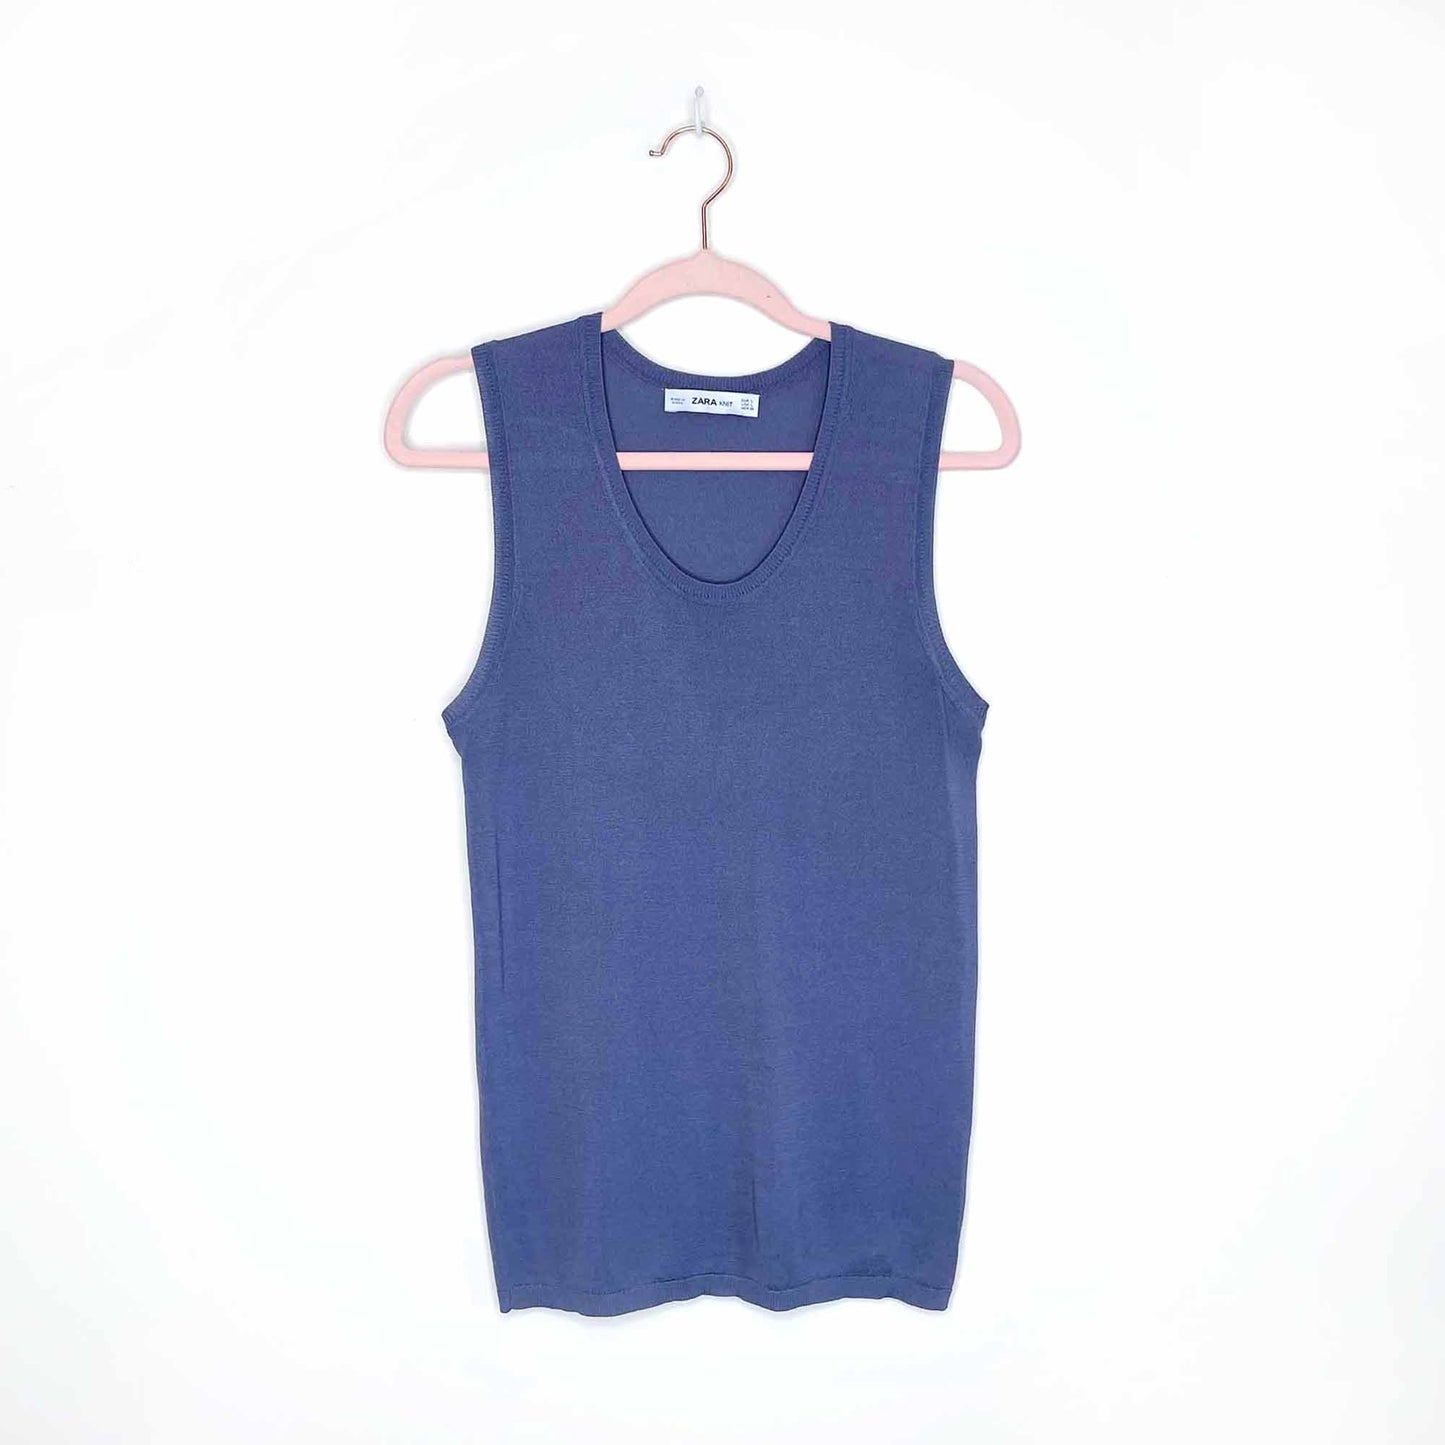 zara knit dusty blue sleeveless top - size large